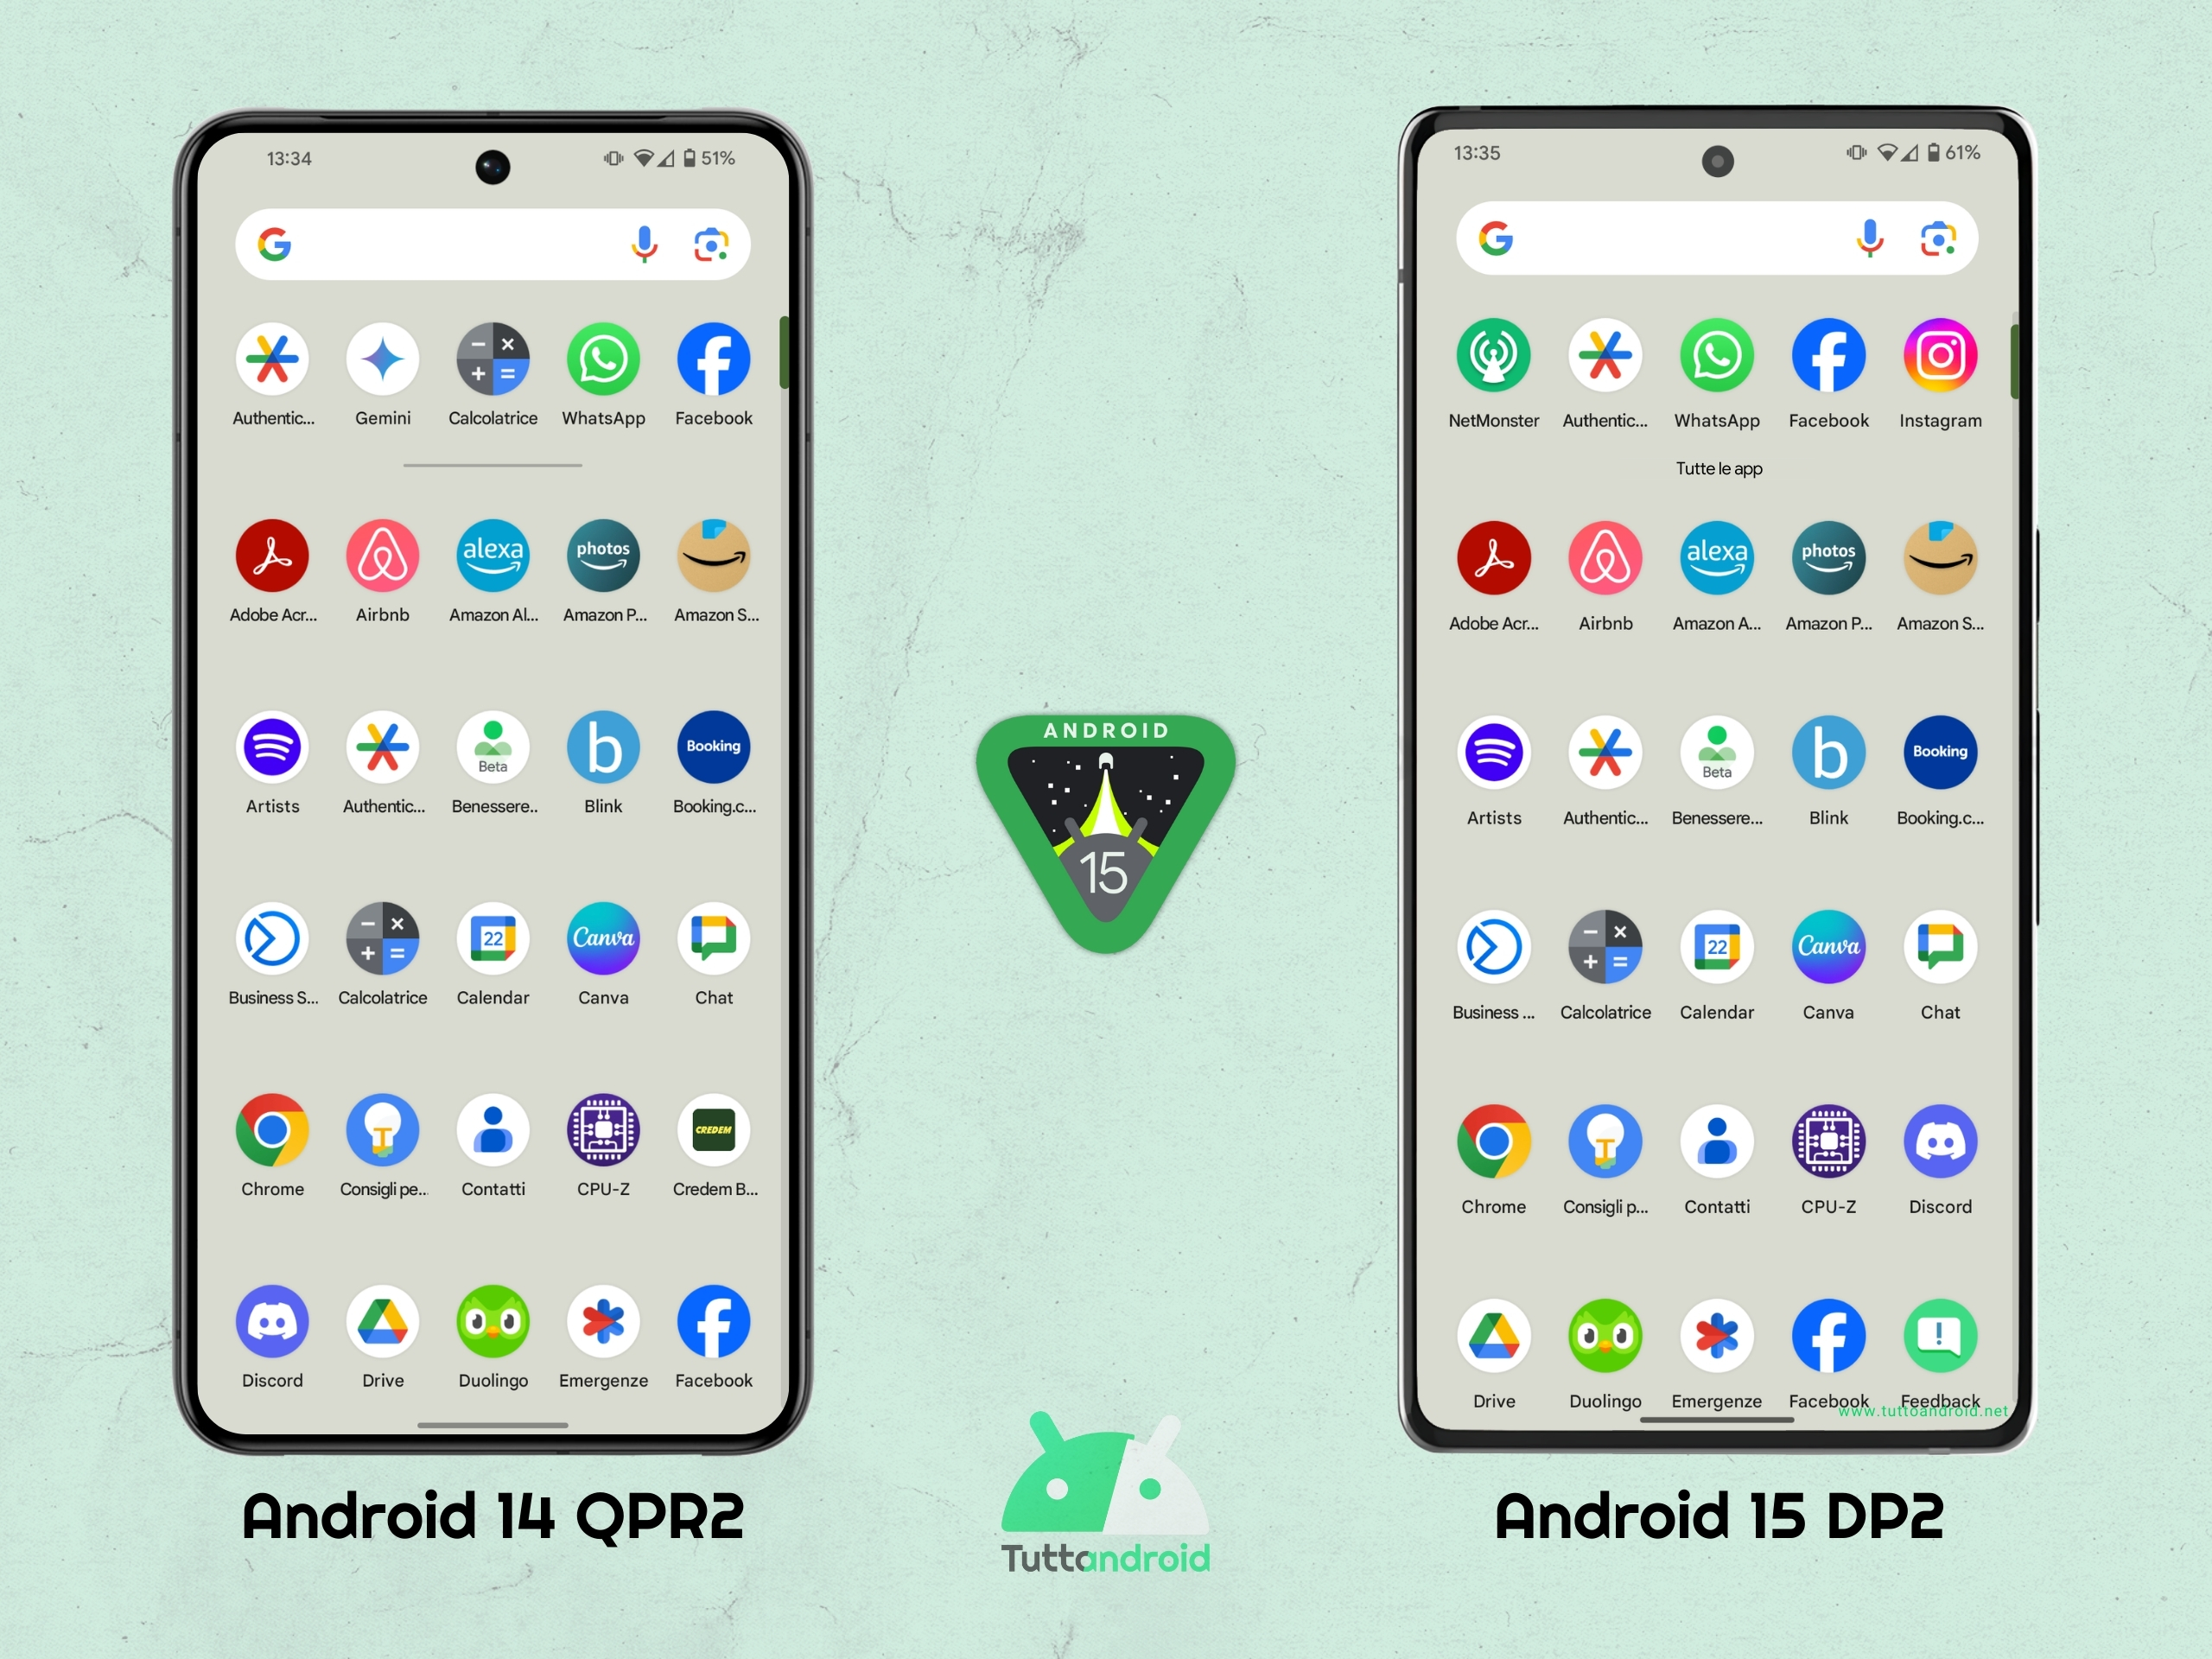 Android 15 DP2 - Pixel Launcher